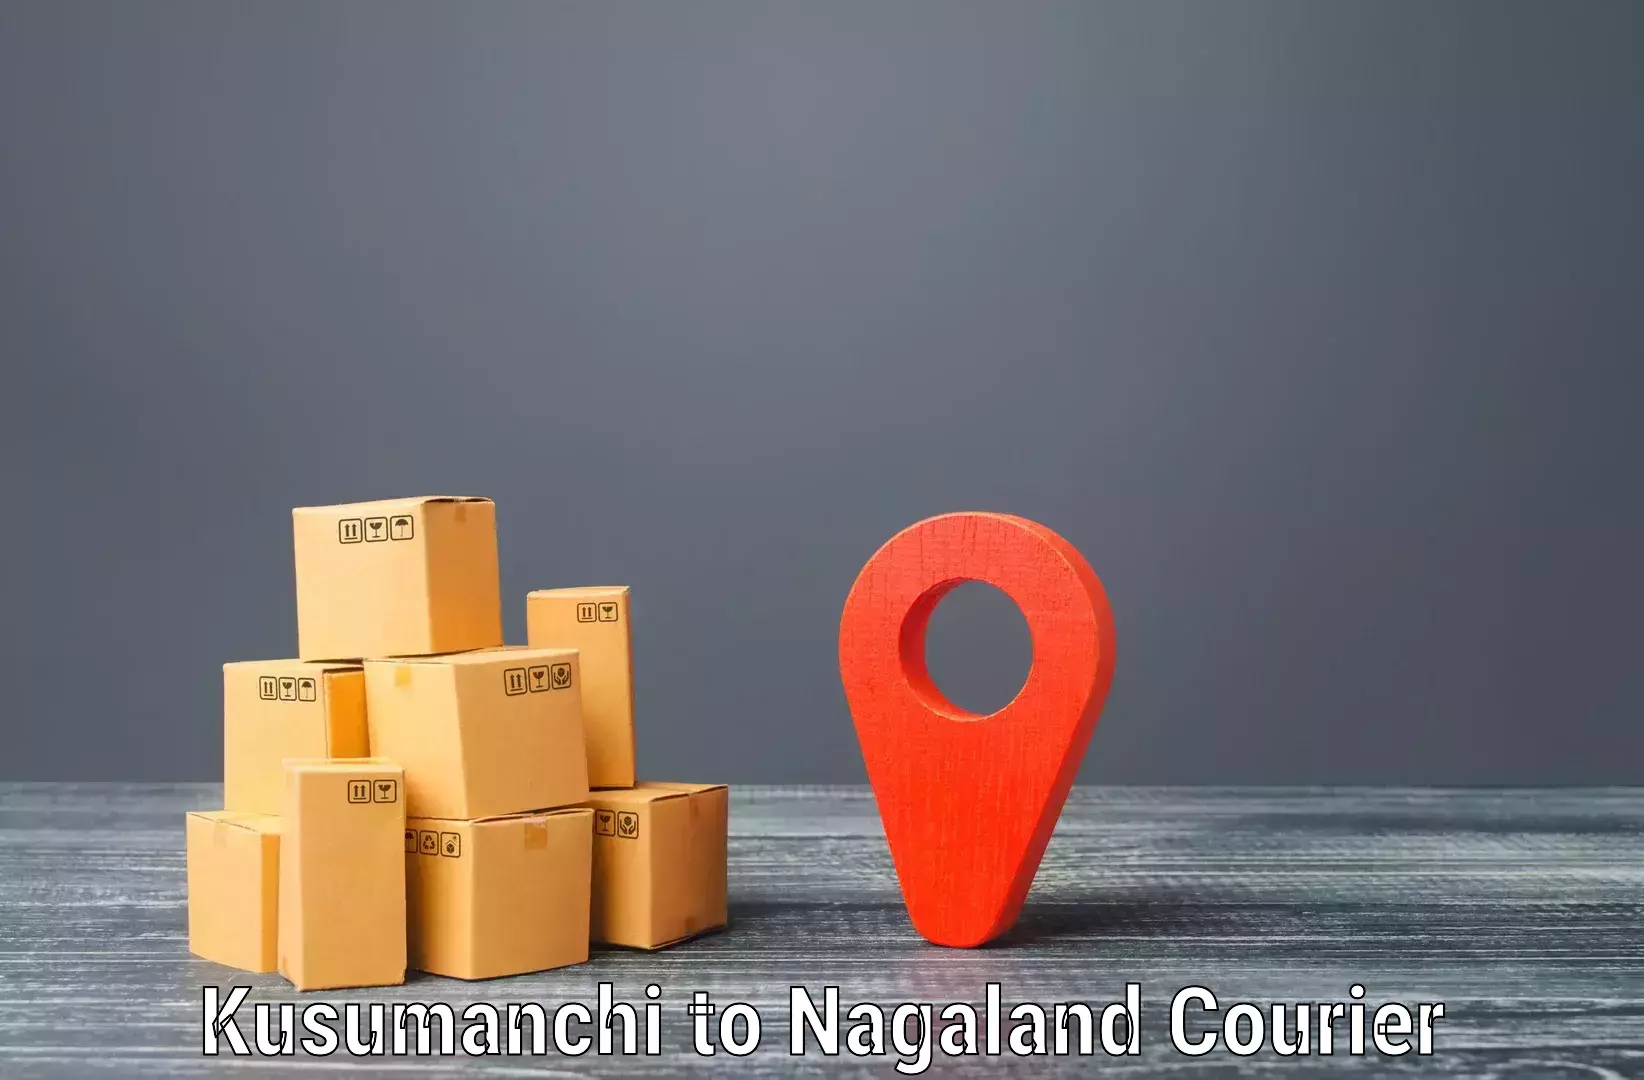 Courier service efficiency Kusumanchi to Nagaland